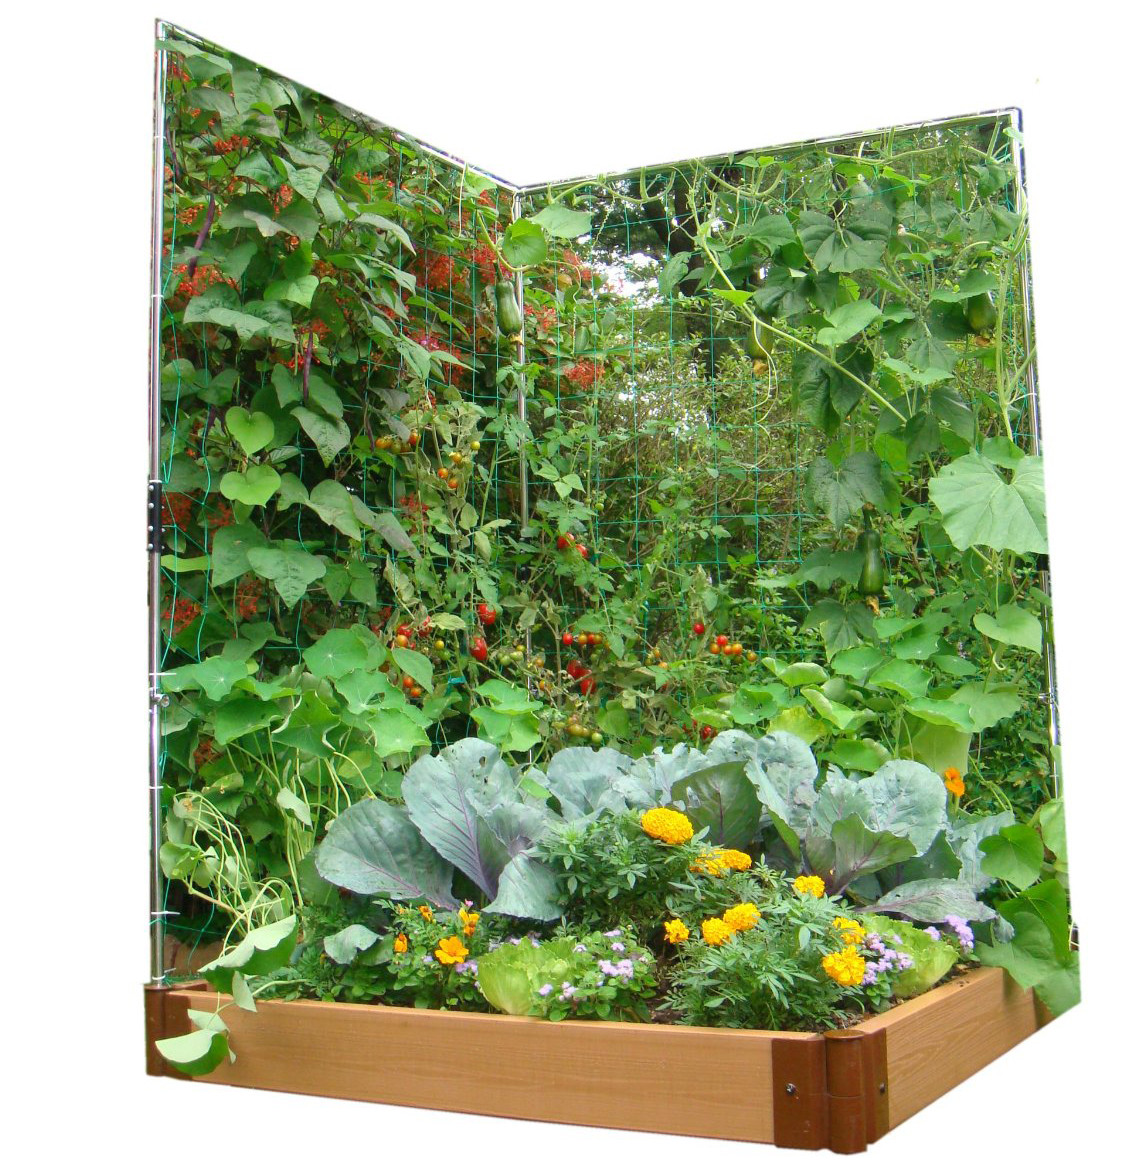 Best ideas about Vertical Garden Ideas
. Save or Pin 9 Ve able Gardens using Vertical Gardening Ideas Now.